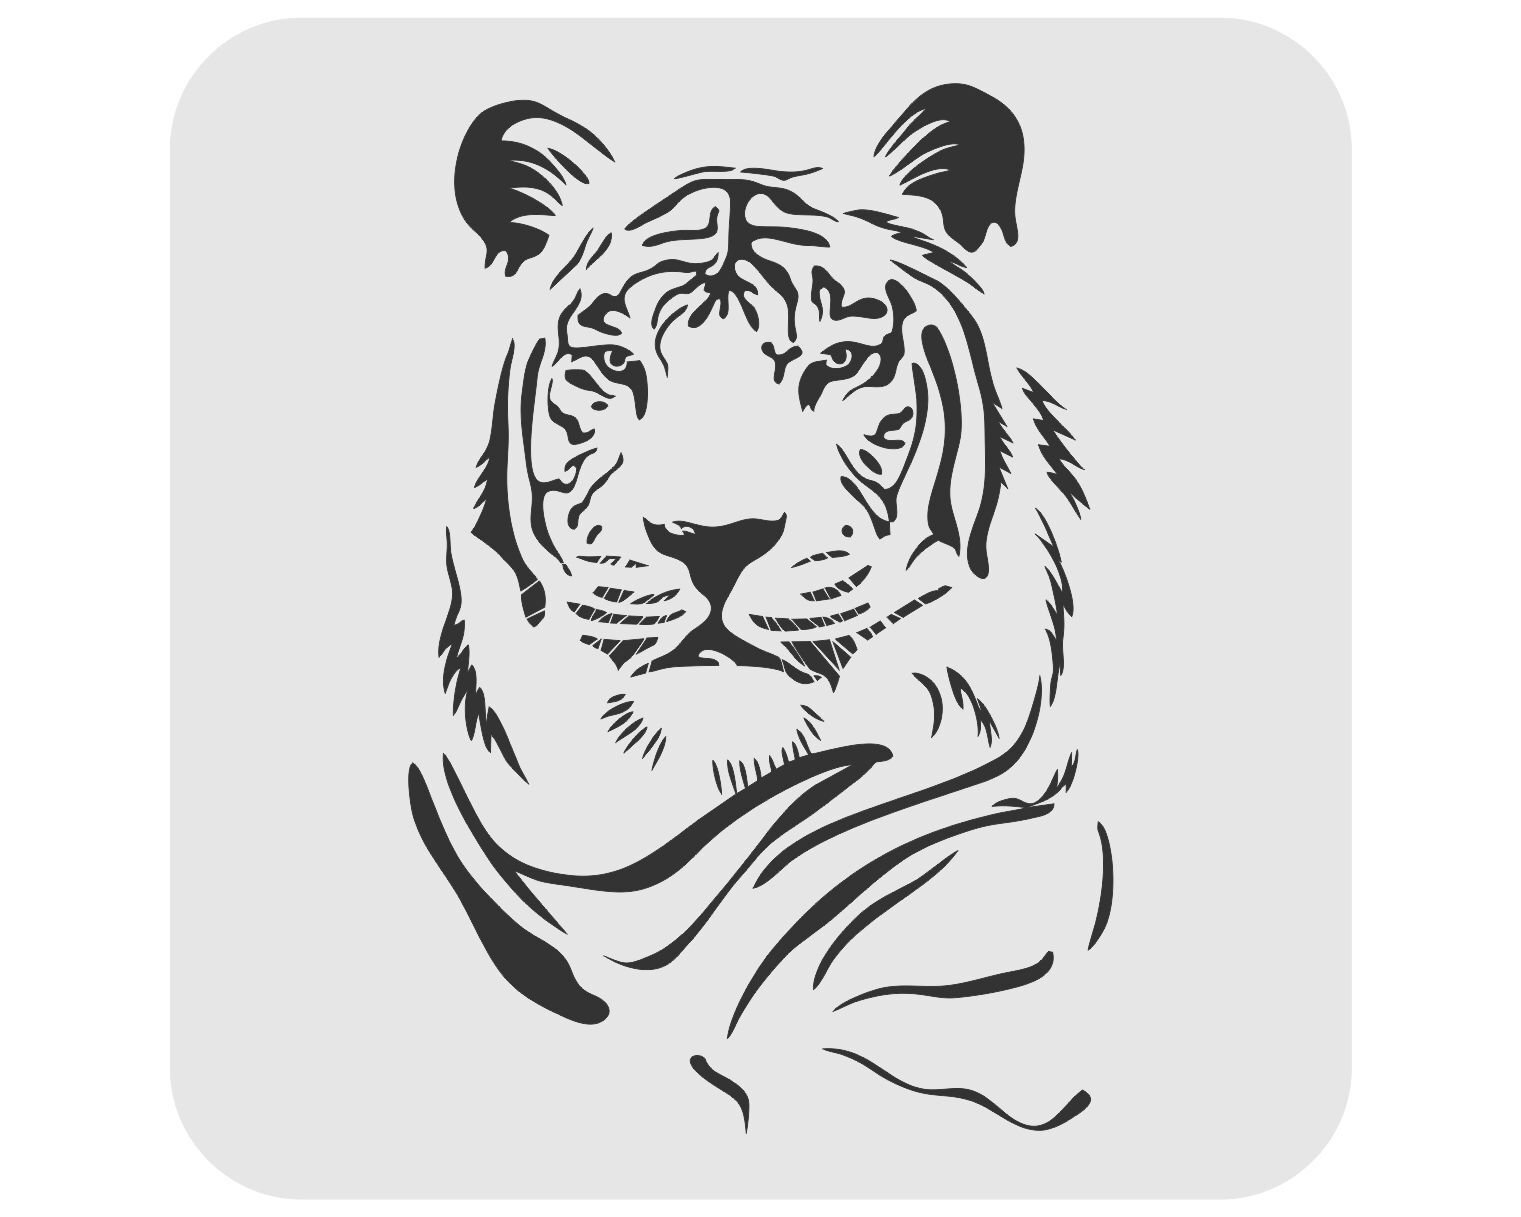 Графика для печати а4. Трафарет тигра. Тигр рисунок. Векторный рисунок. Тигр для гравировки эскиз.